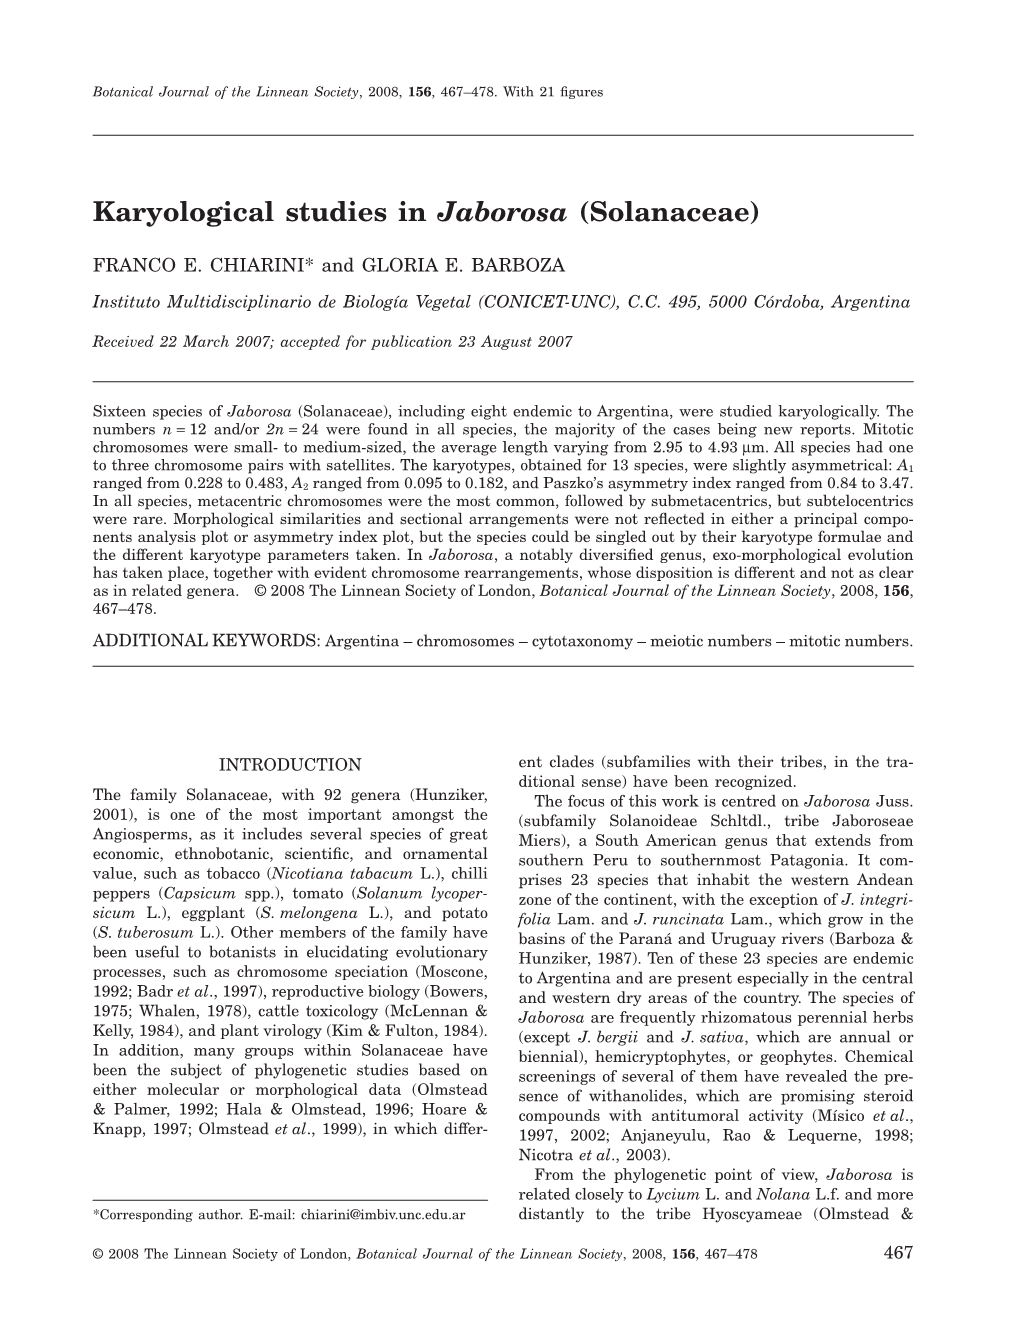 Karyological Studies in Jaborosa (Solanaceae)